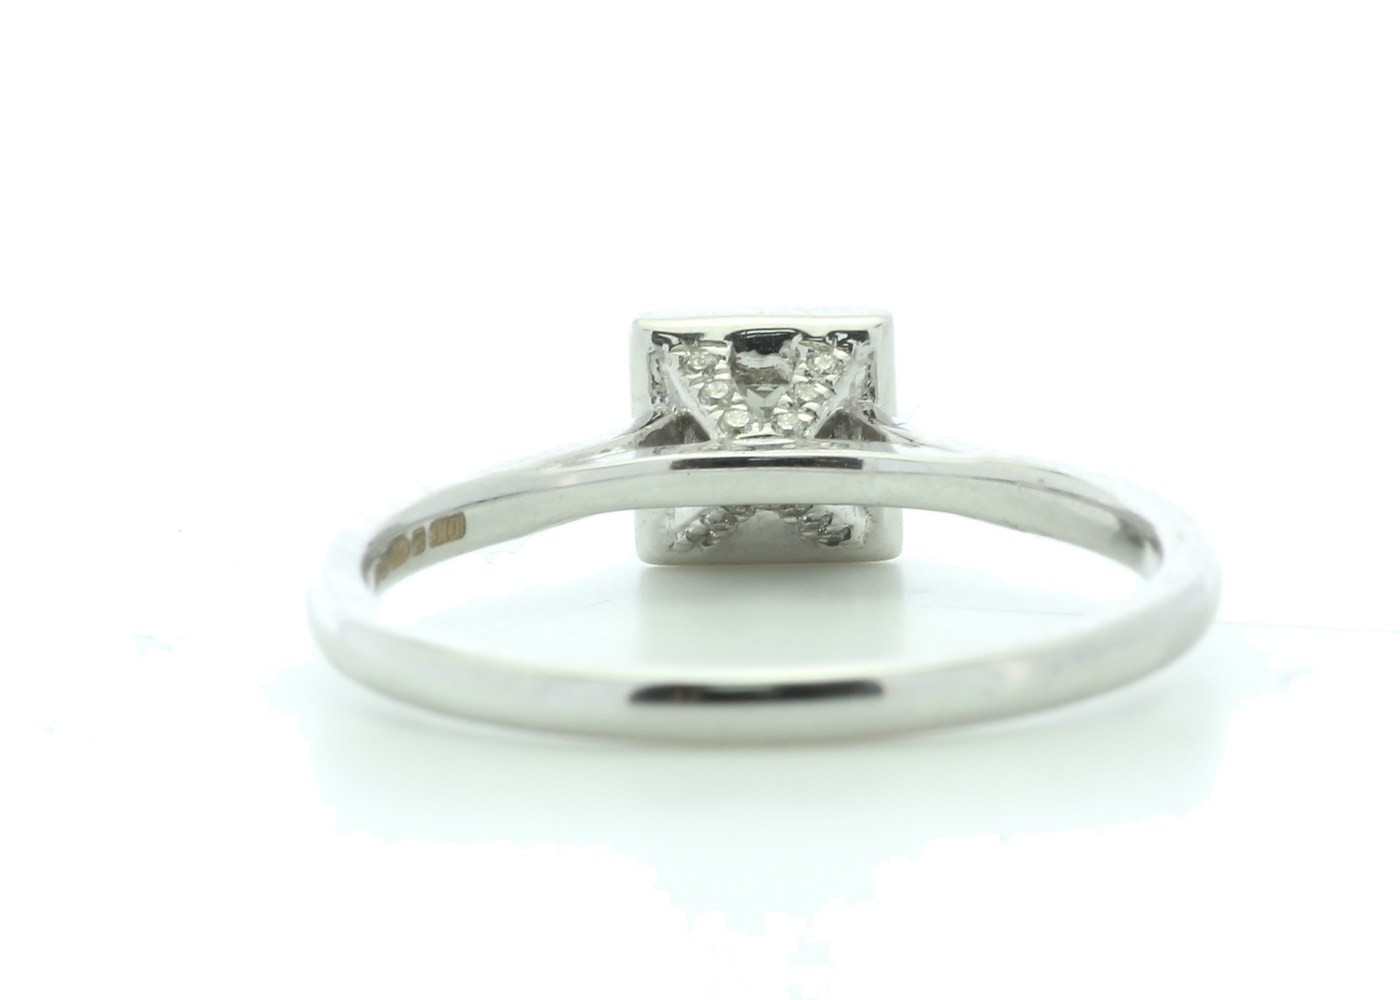 18ct White Gold Halo Set Diamond Ring 0.38 Carats - Image 3 of 5